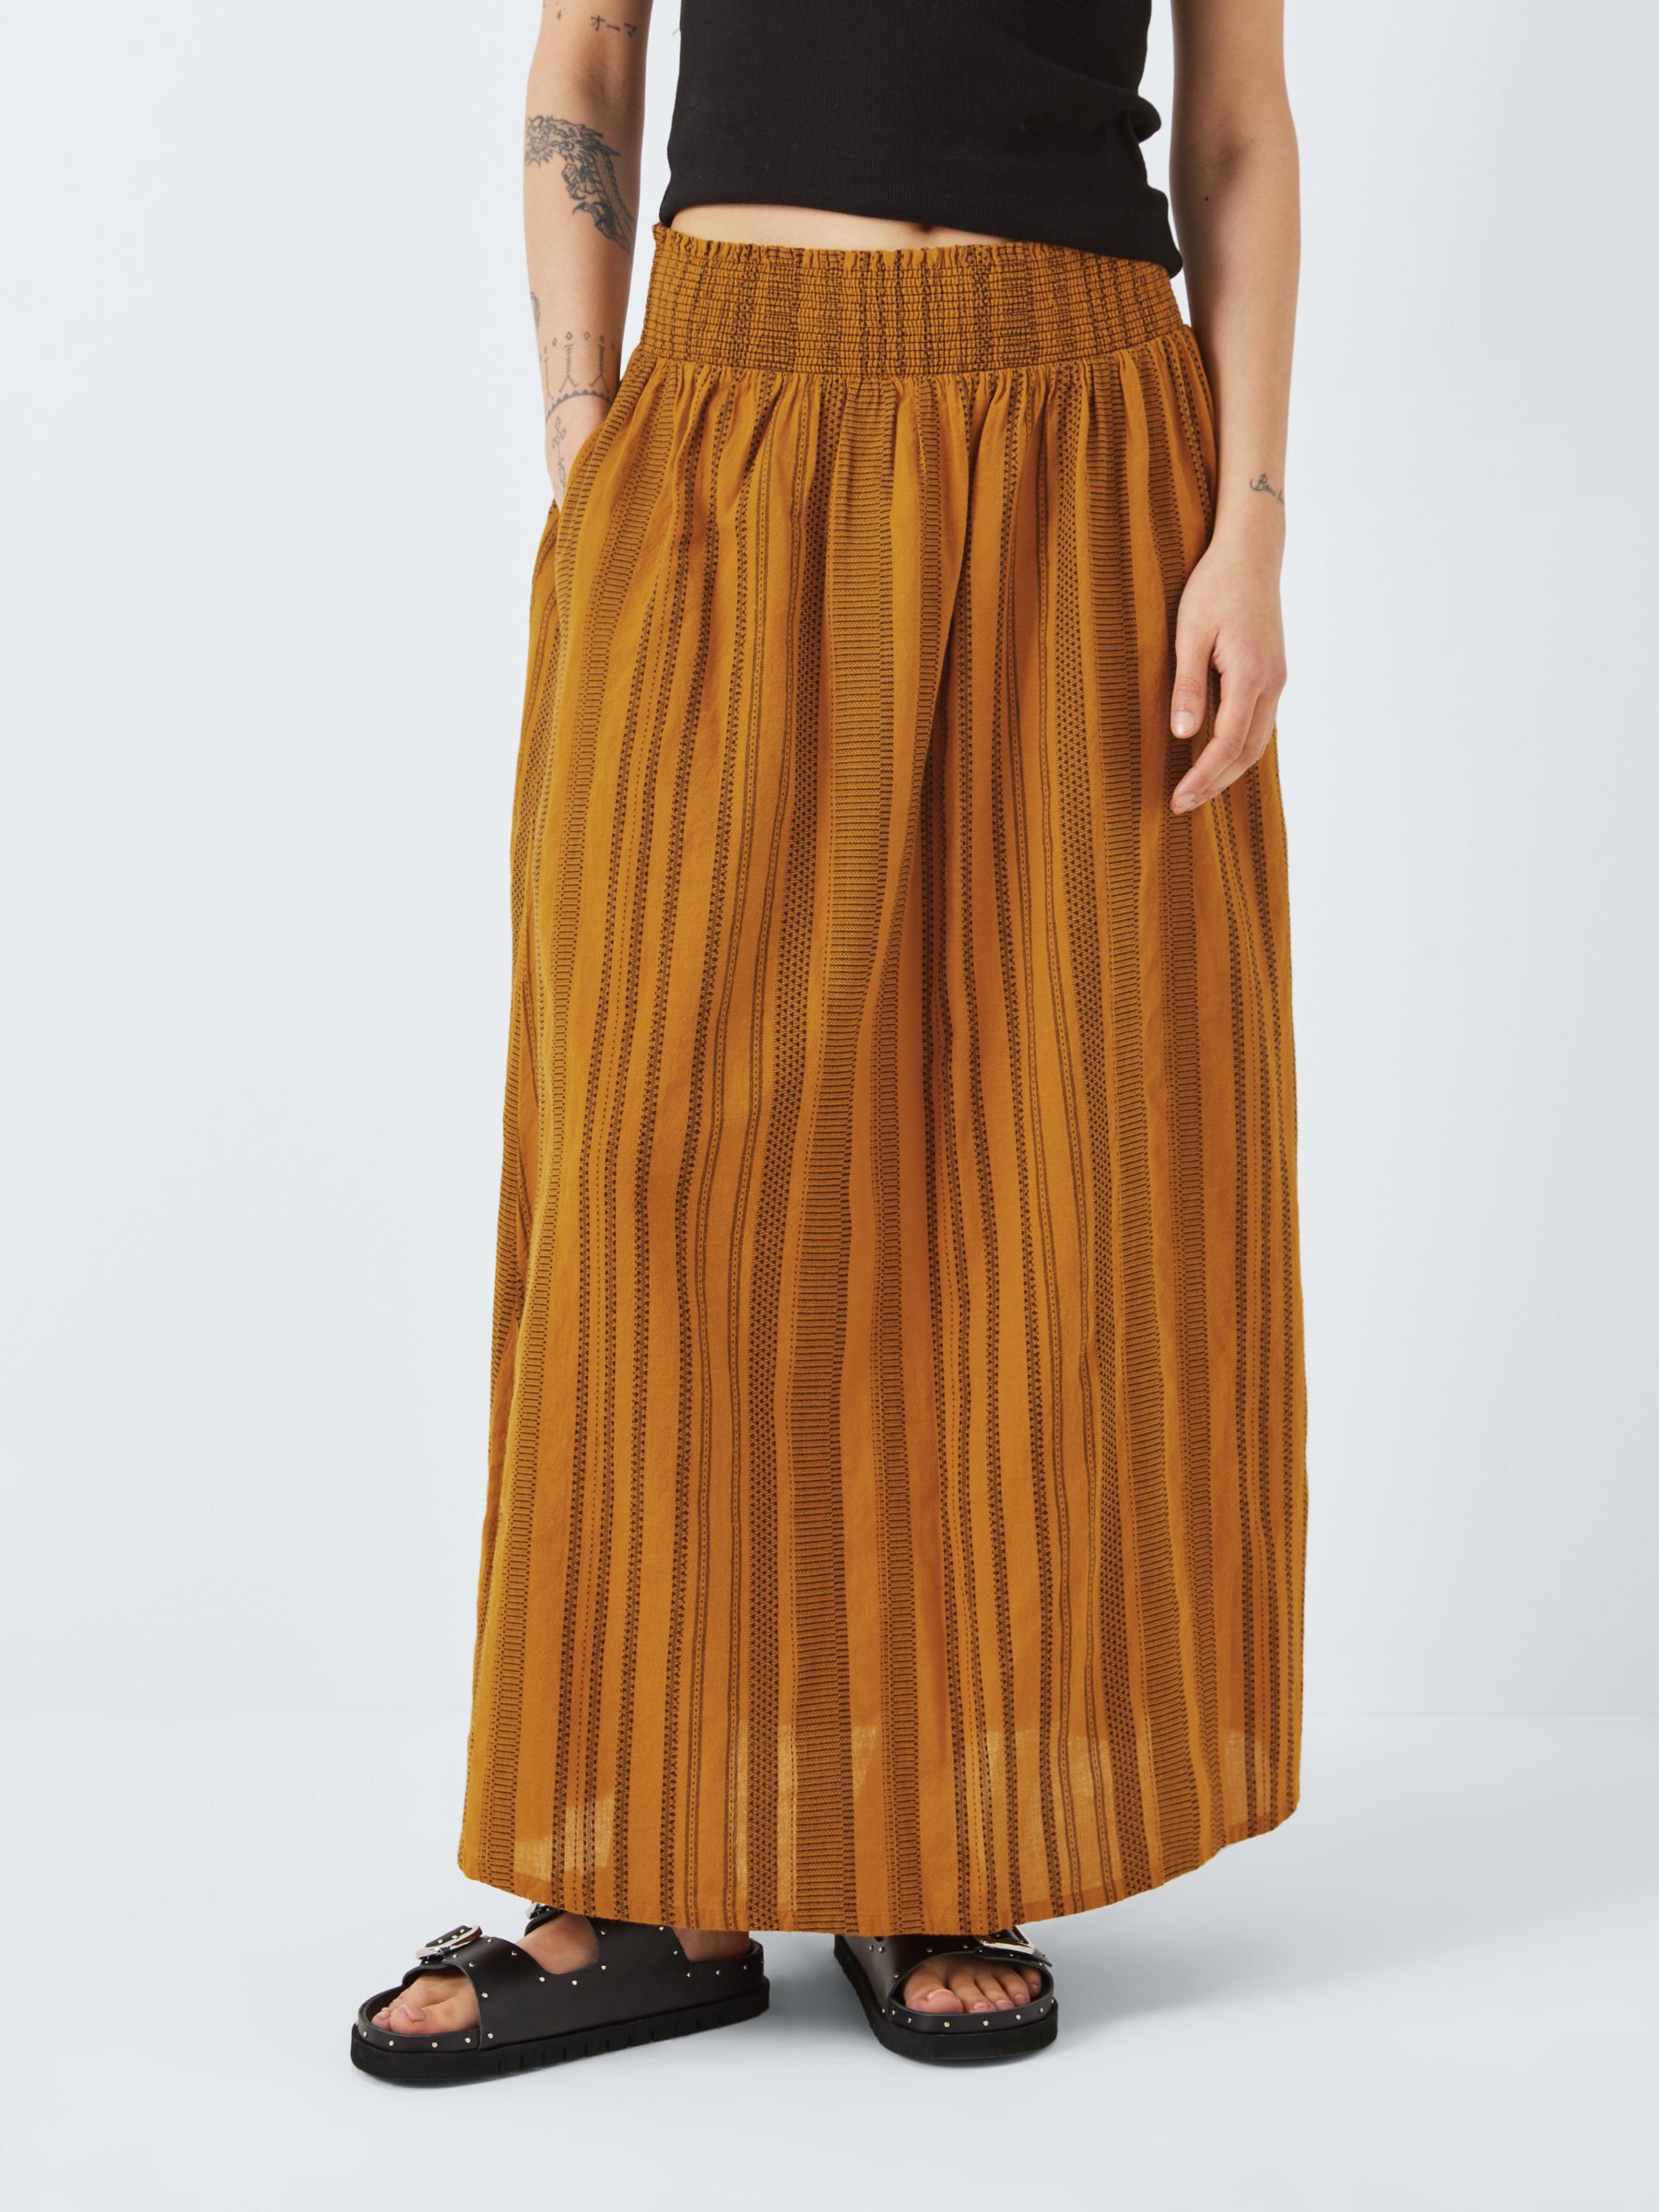 AND/OR Phoenix Jacquard Stripe Skirt, Yellow, 18